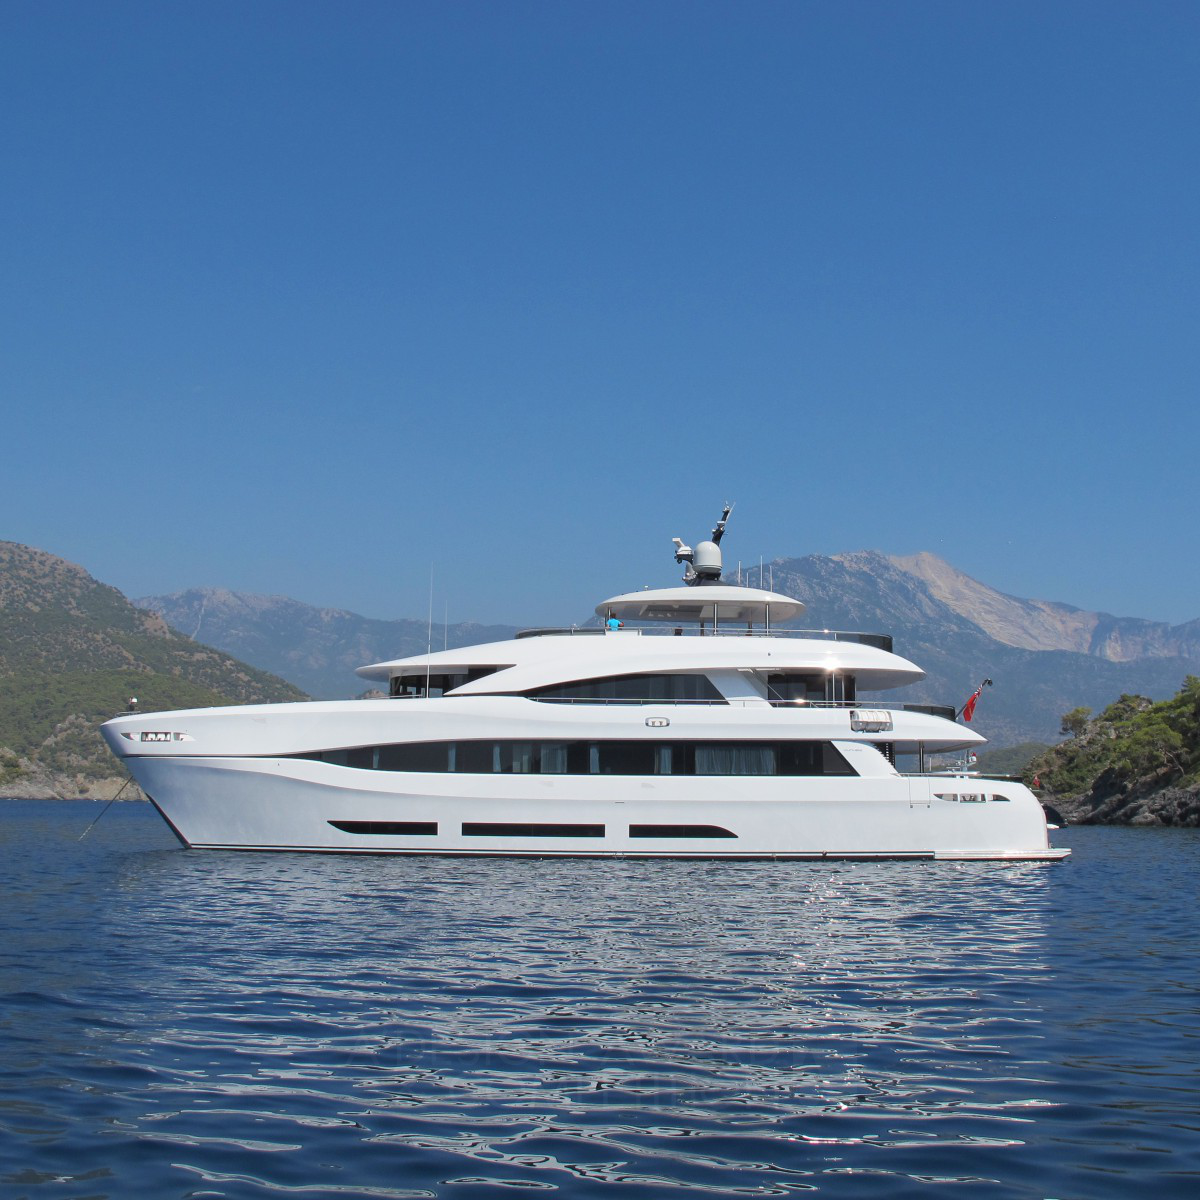 Curvelle quaranta luxury power catamaran superyacht by Luuk V. van Zanten